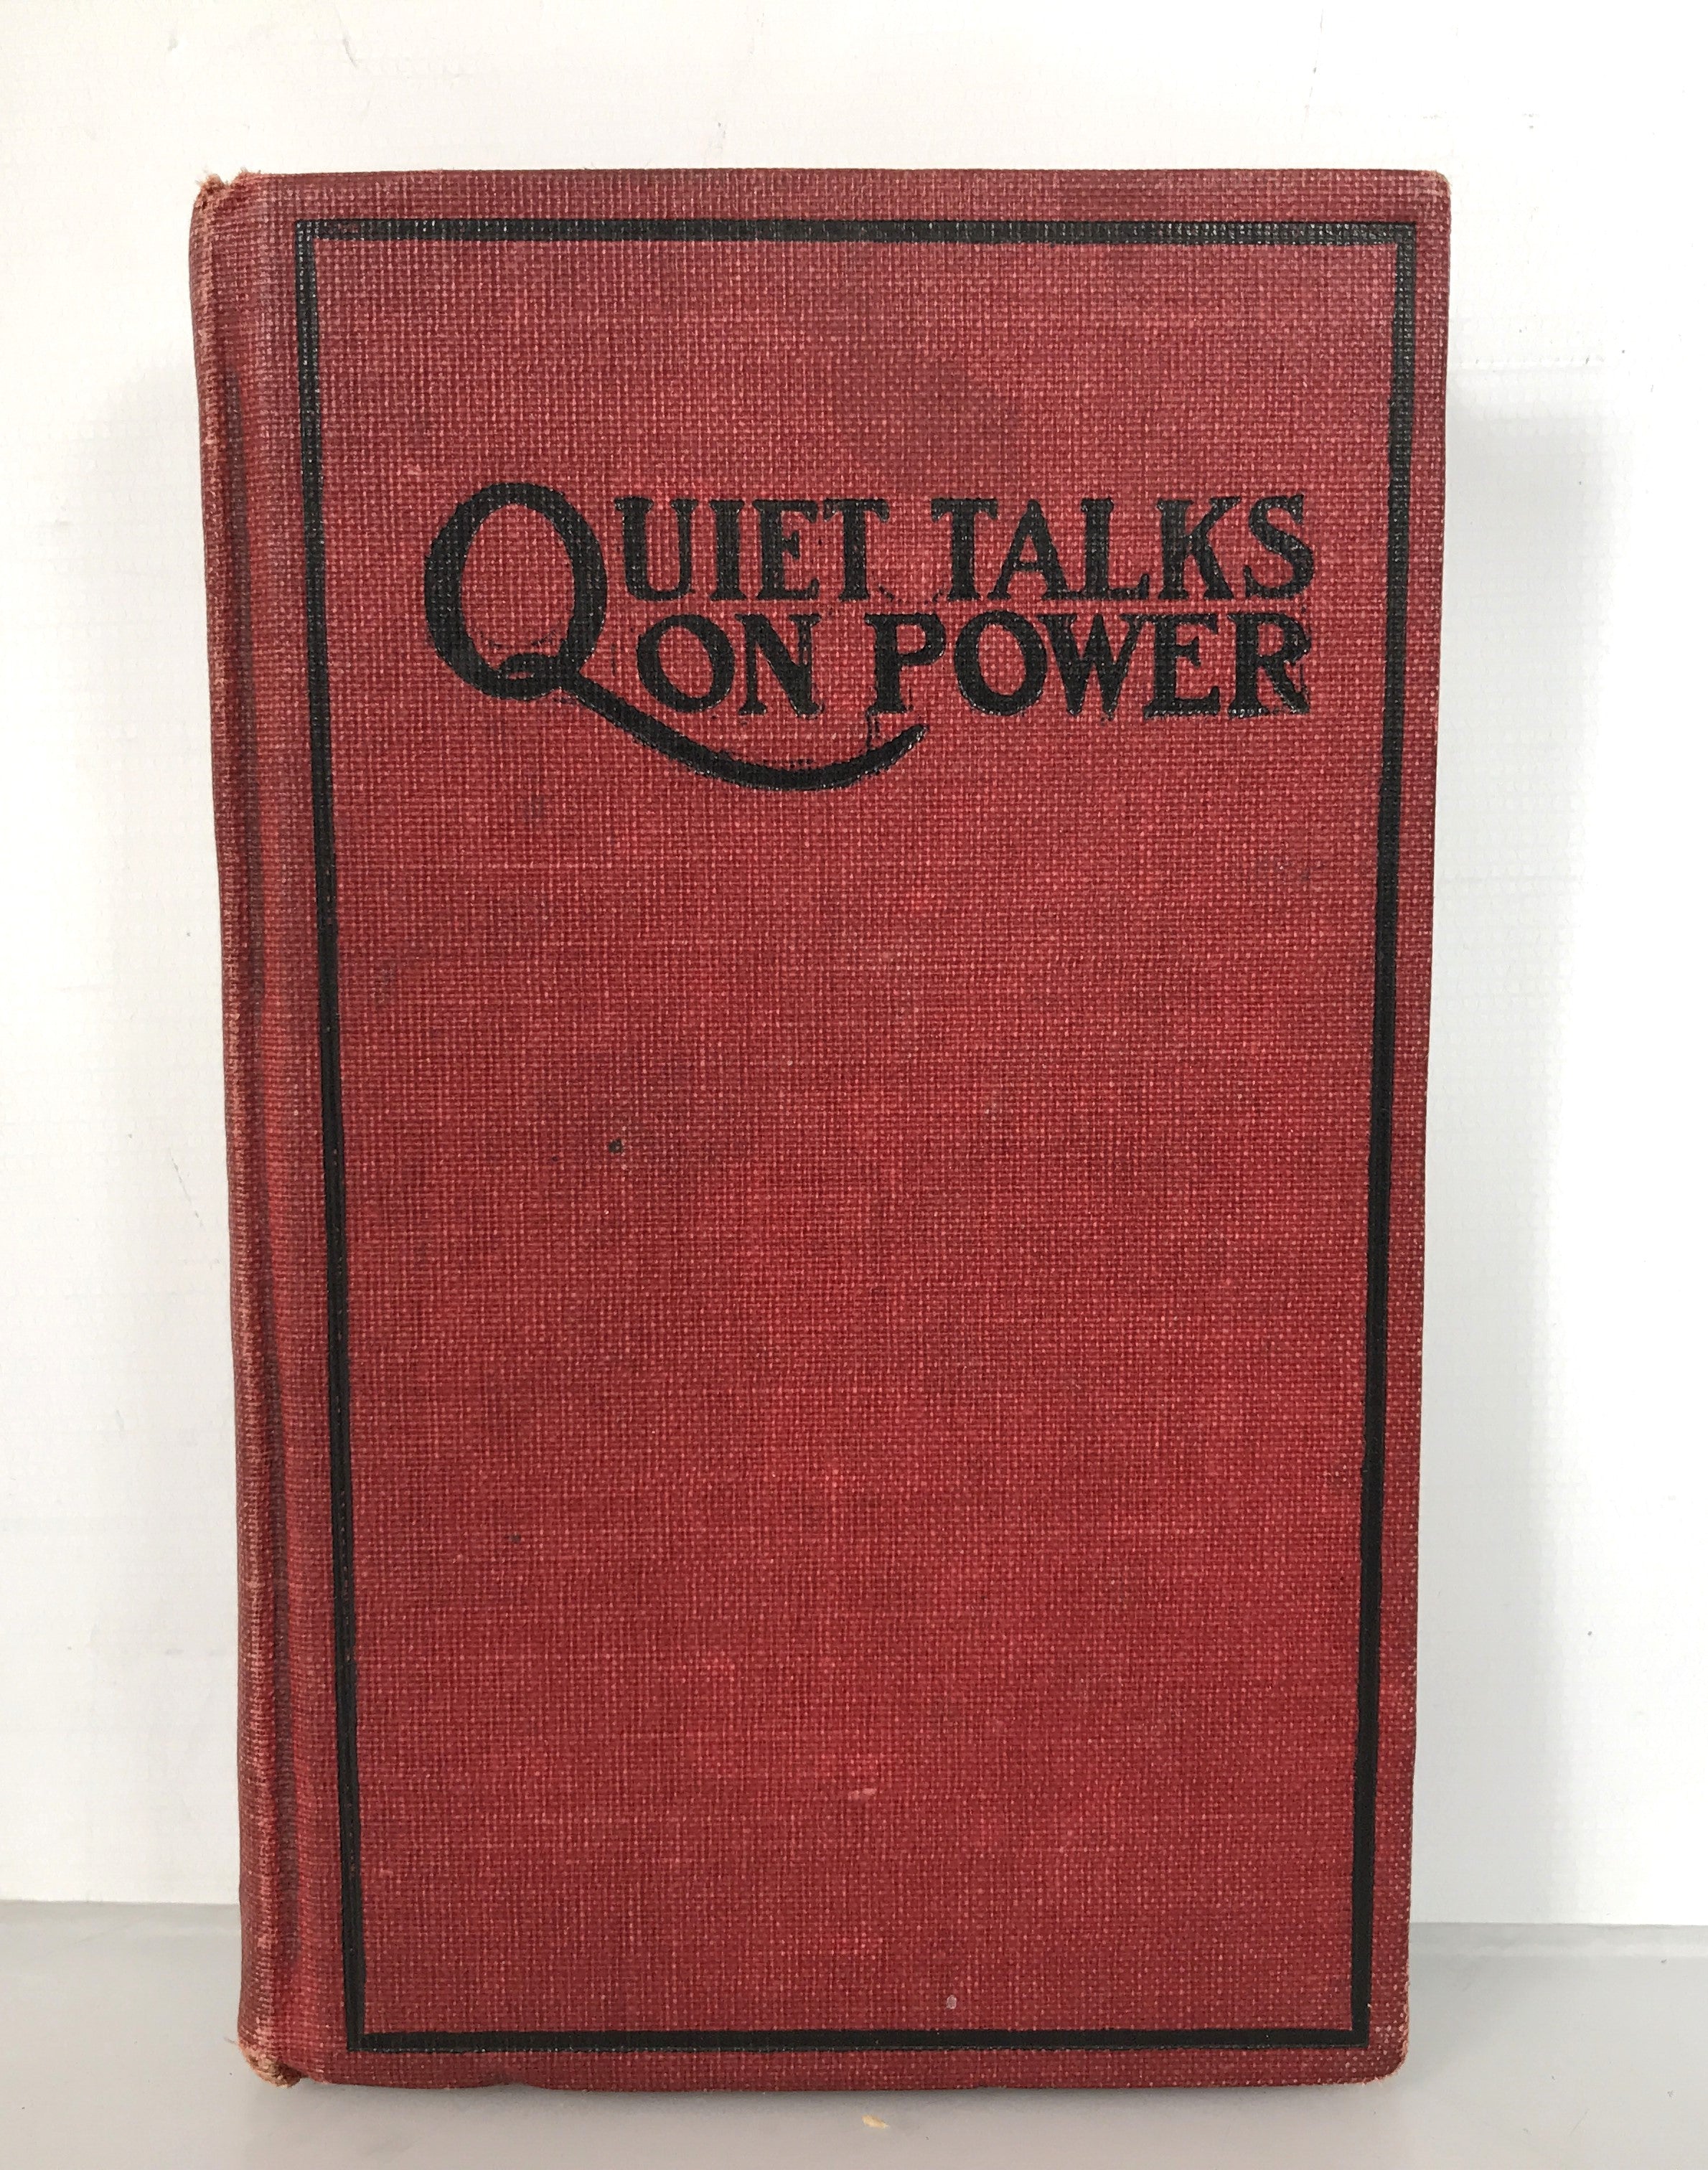 Quiet Talks on Power by S.D. Gordon 1901 HC